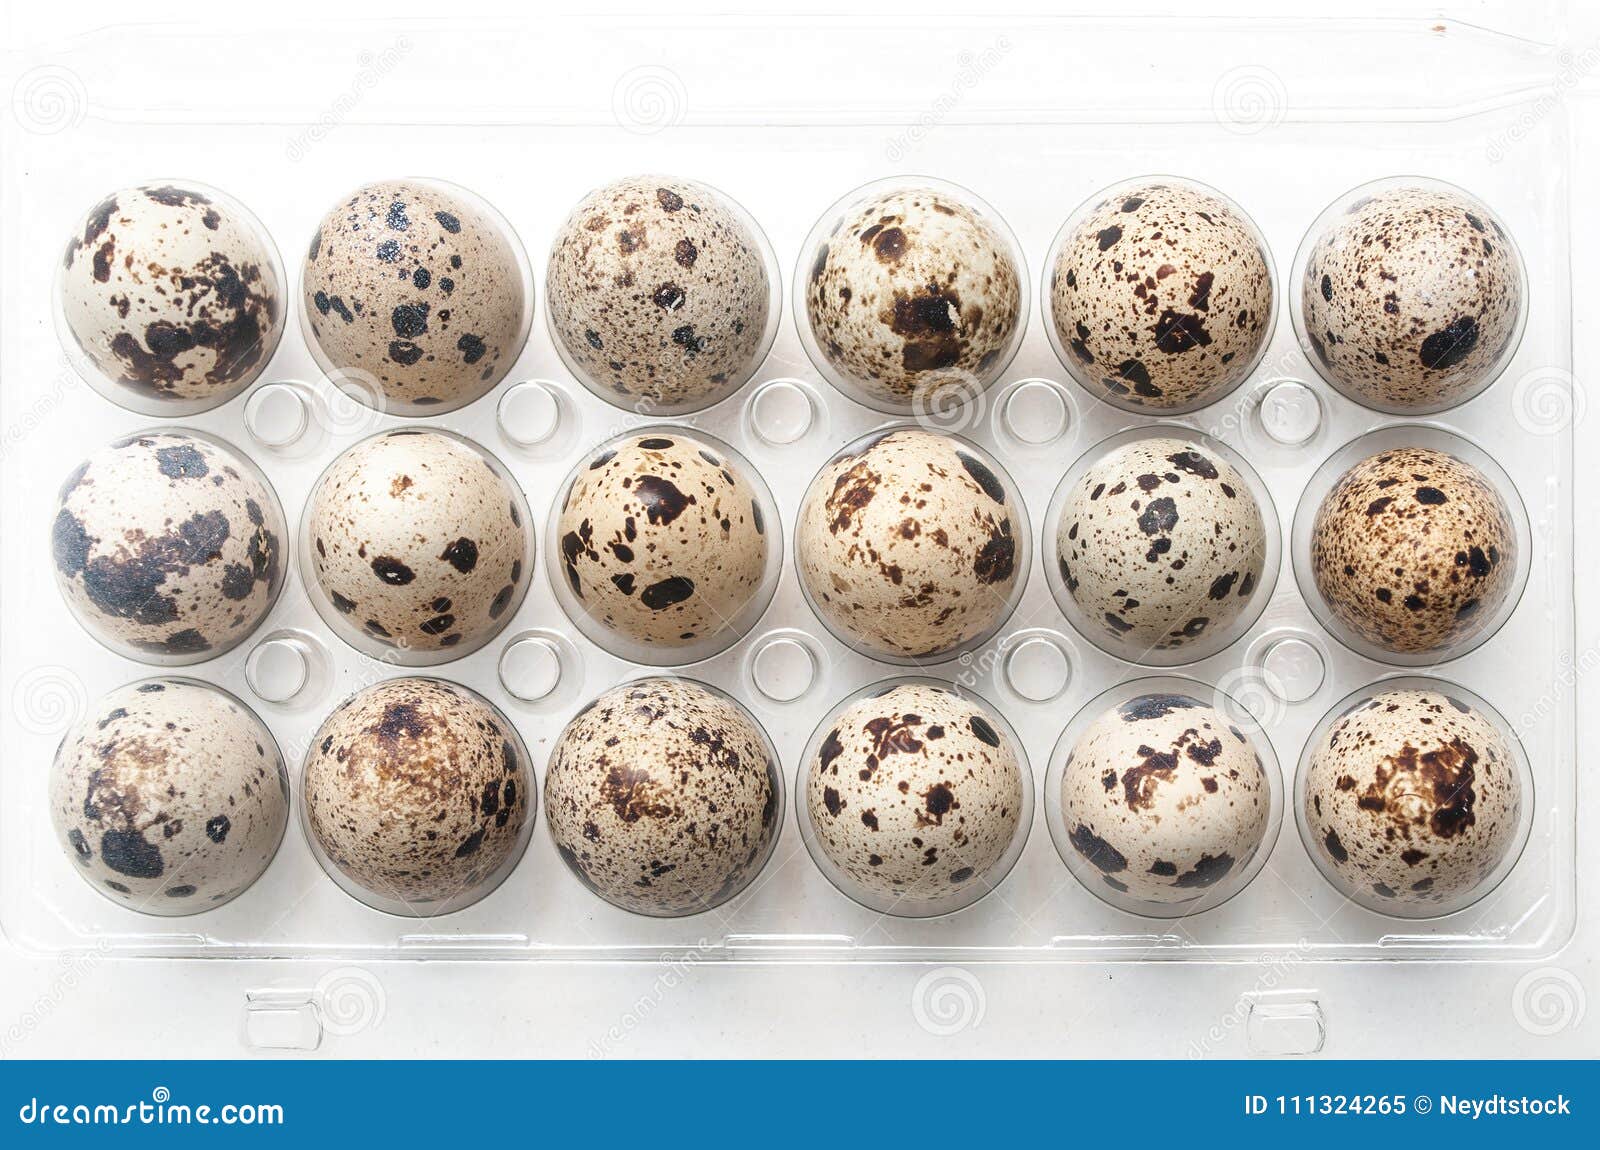 quail eggs alignment in a plastic box top vieuw on wh